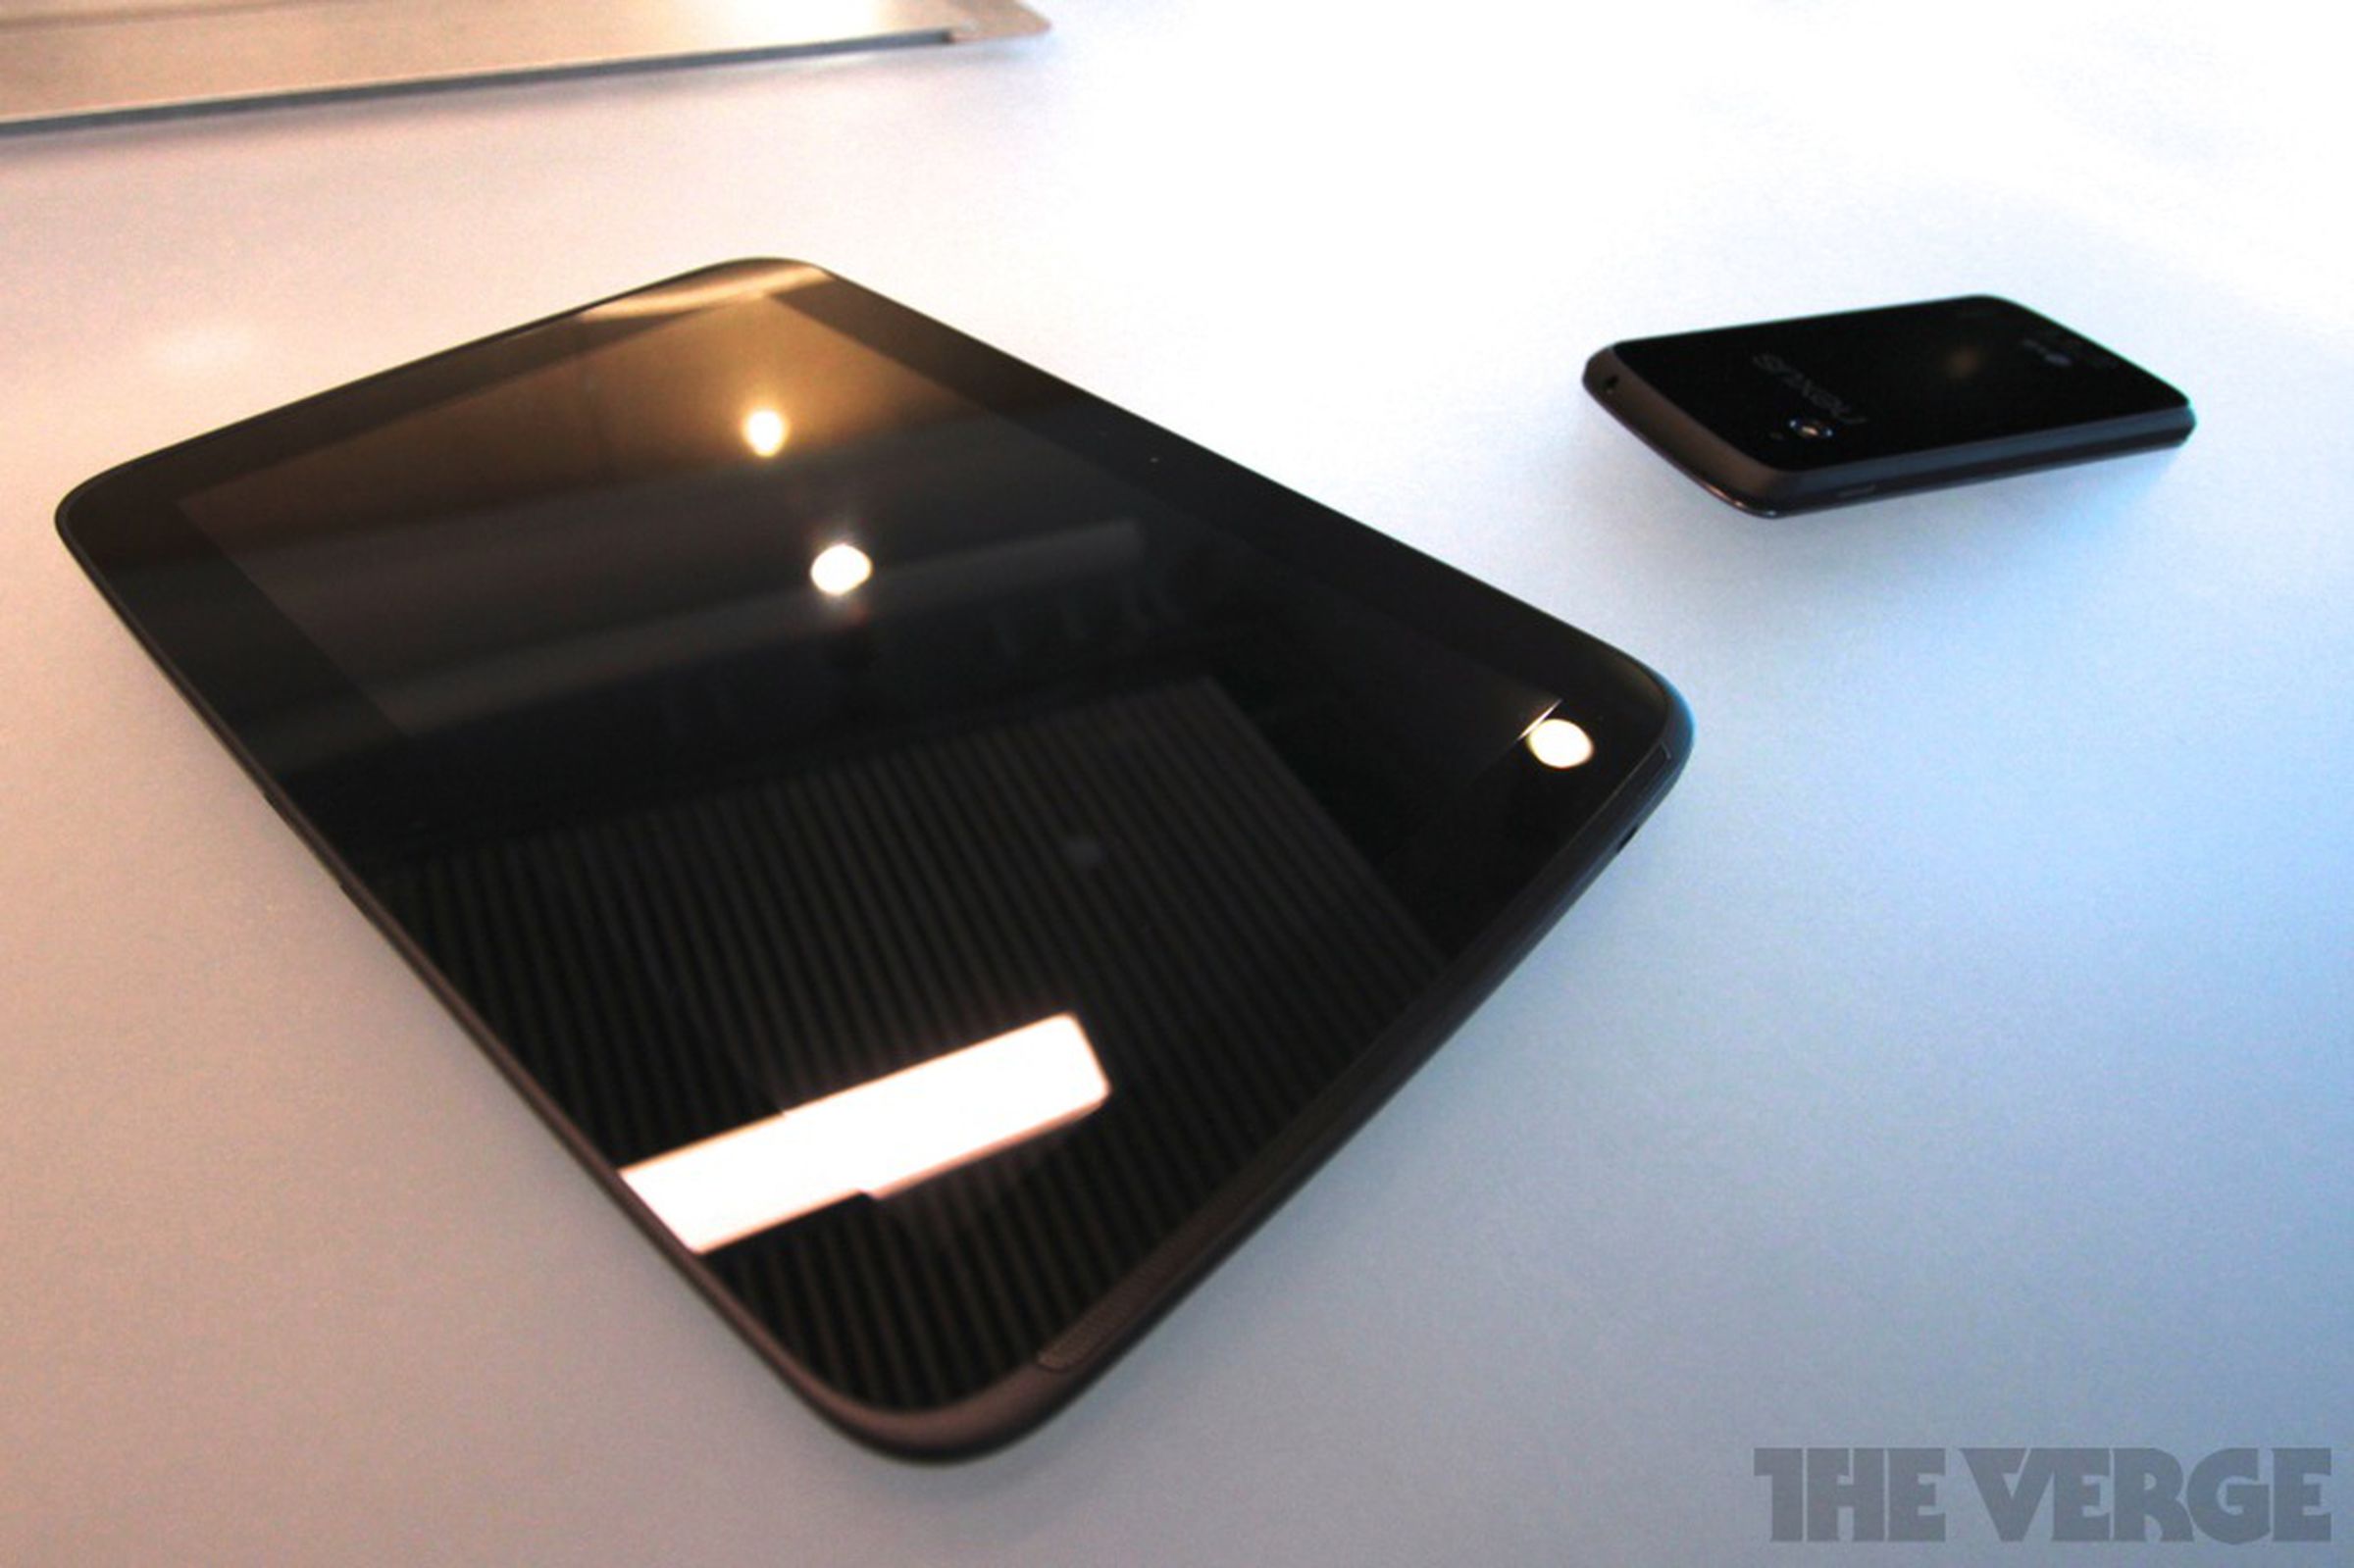 Google Nexus 10 hands-on photos